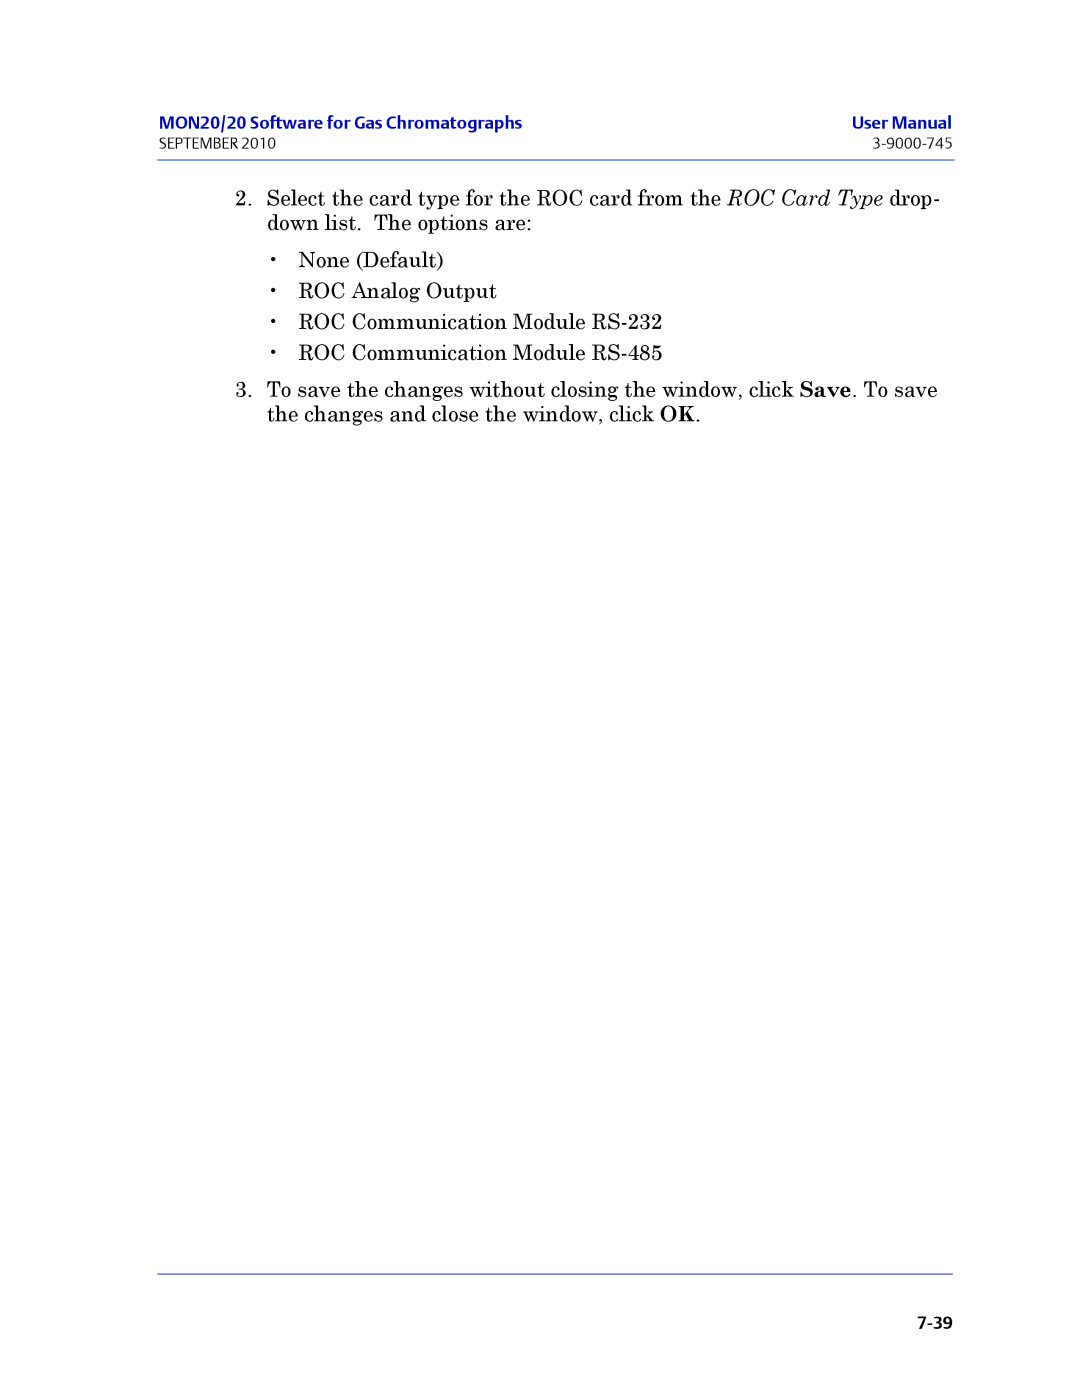 Emerson Process Management 3-9000-745 manual MON20/20 Software for Gas Chromatographs 